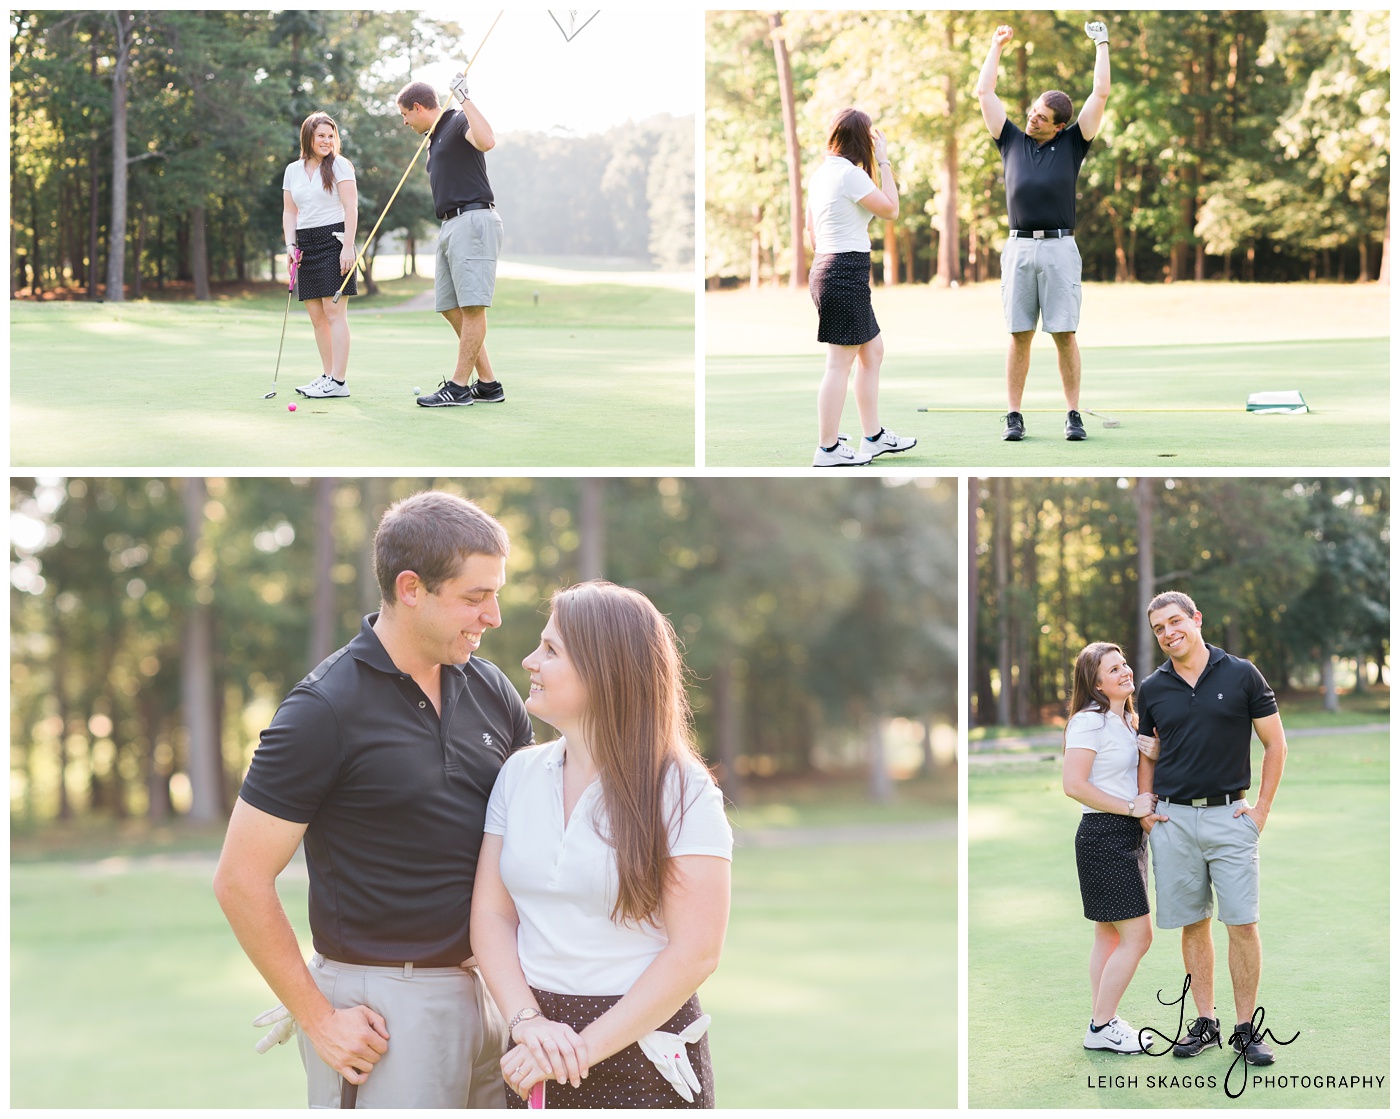 Nicole & Eric | Newport News Golf Club at Deer Run Engagement